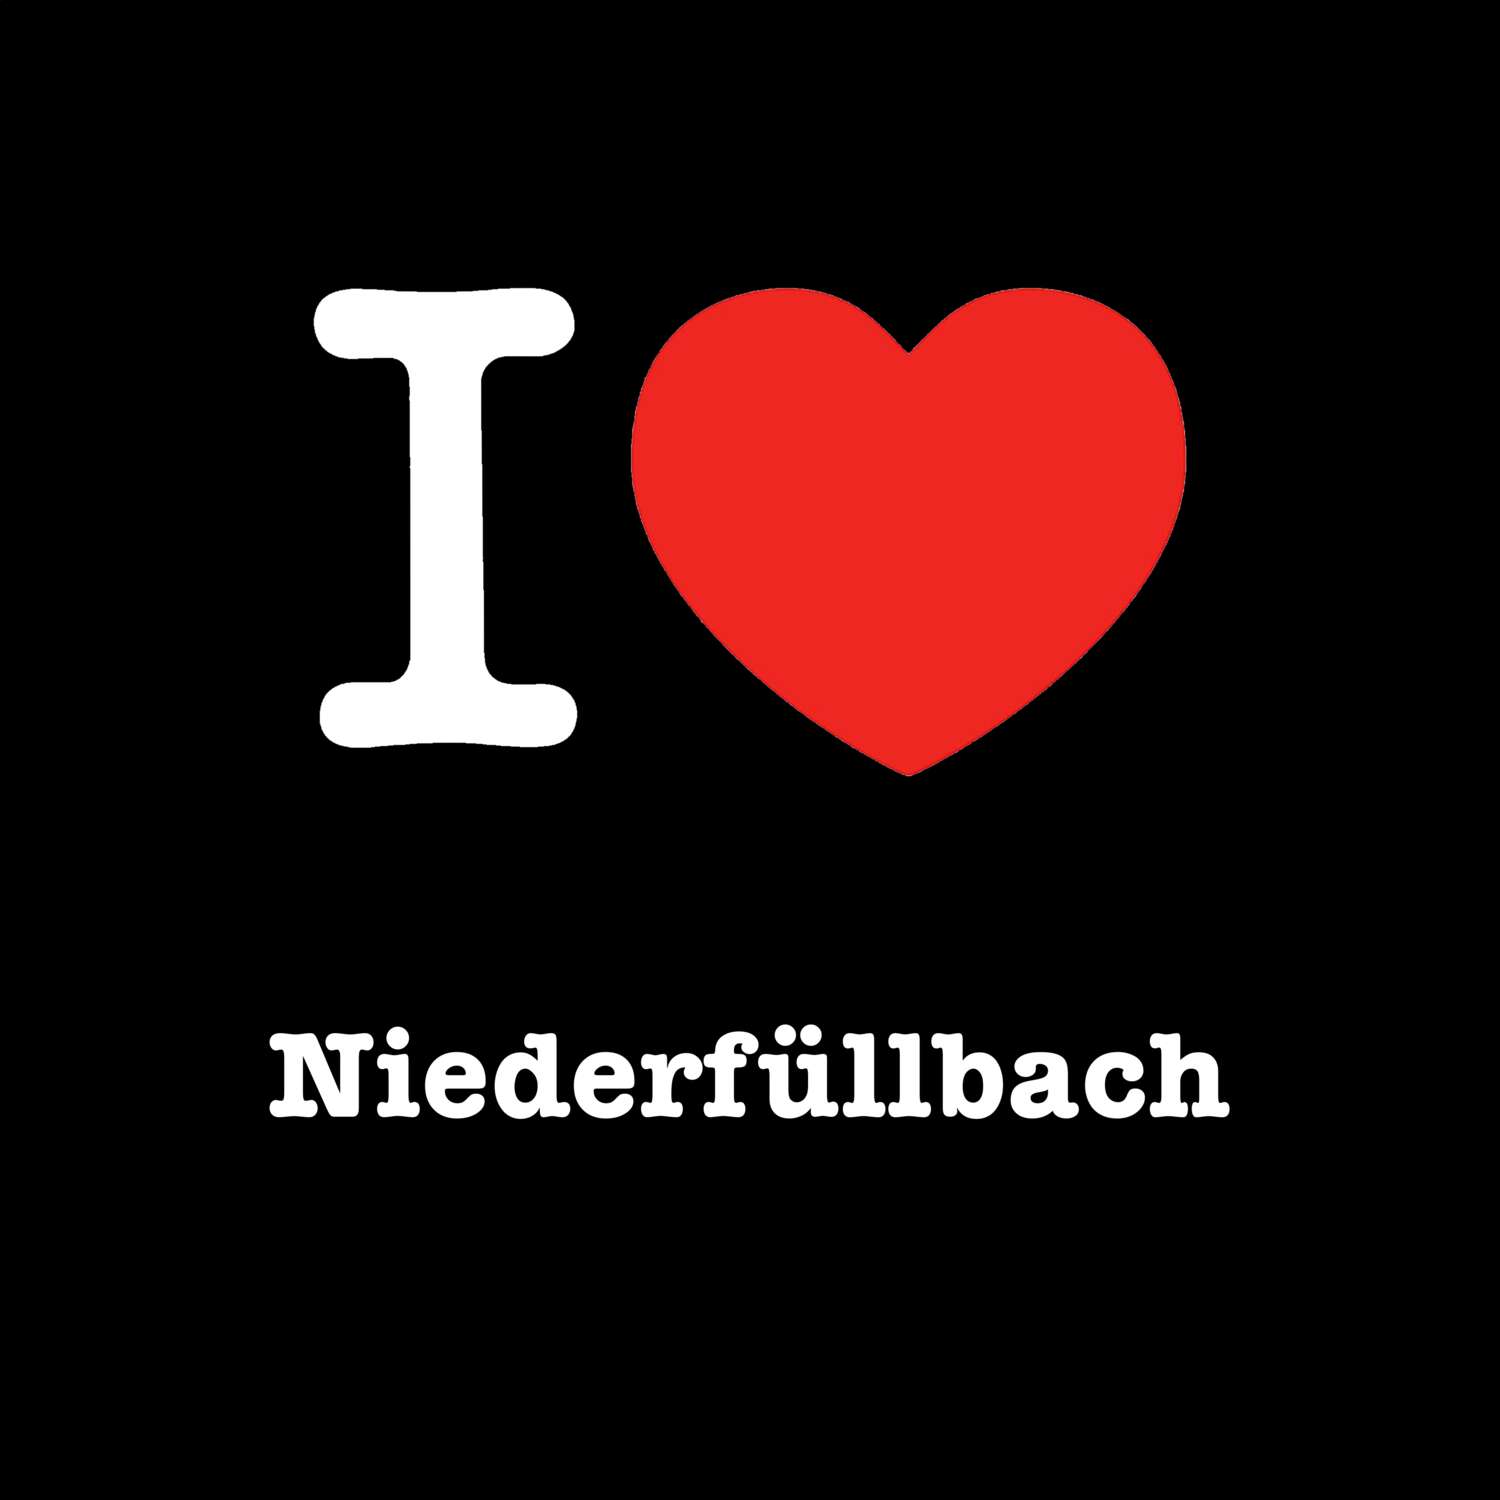 Niederfüllbach T-Shirt »I love«